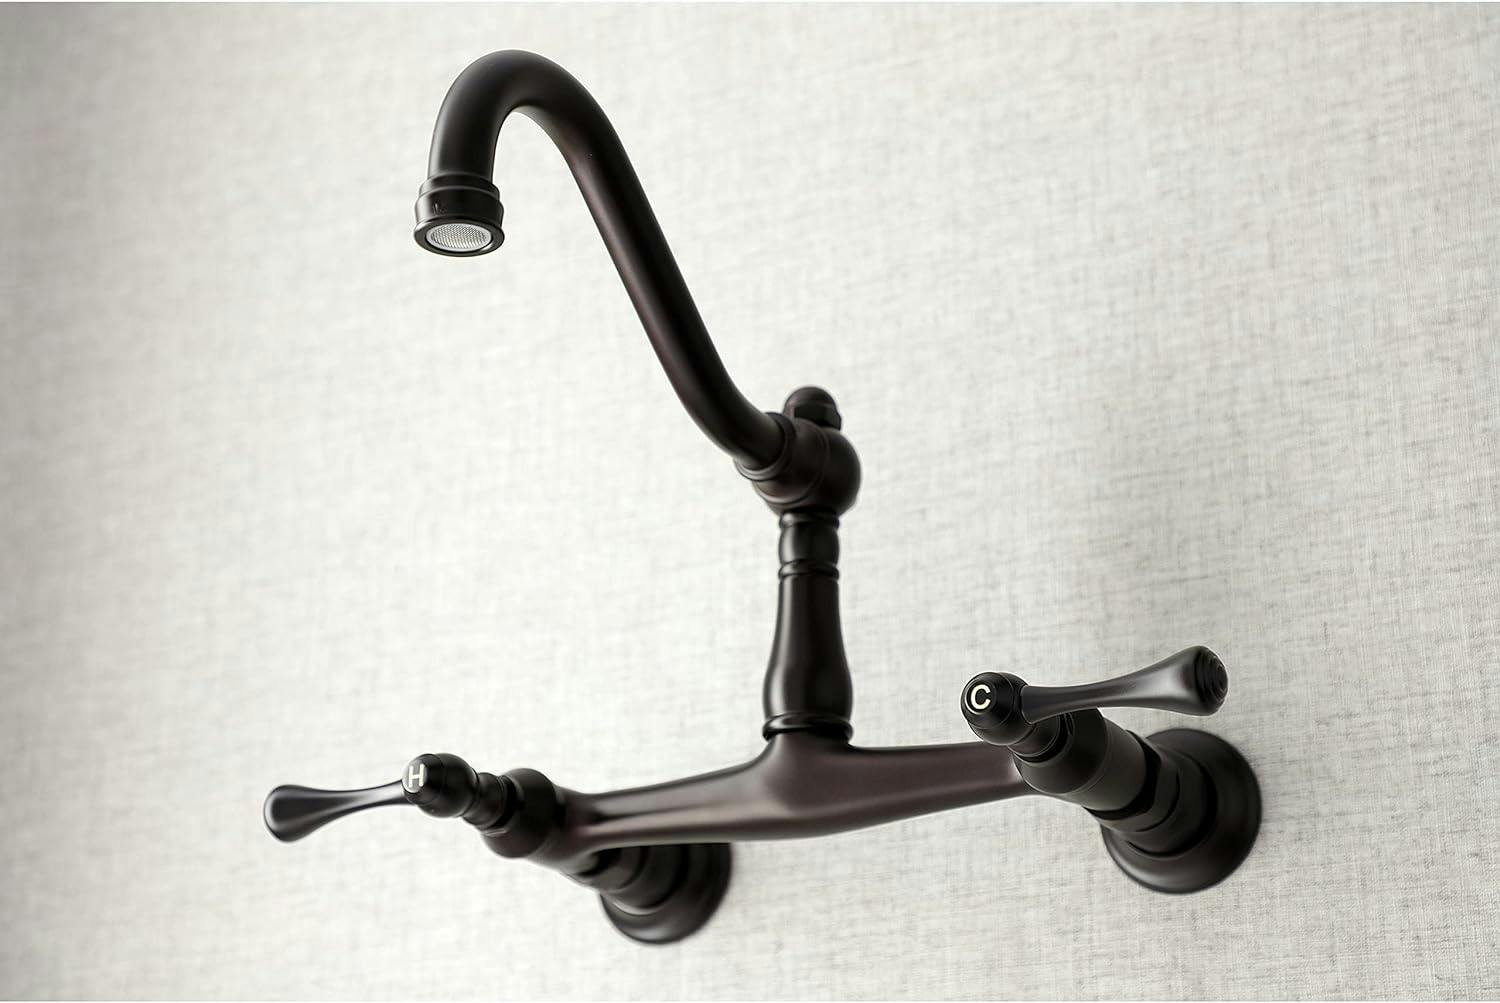 Elegant Vintage 8" Wall Mount Bathroom Faucet in Oil Rubbed Bronze